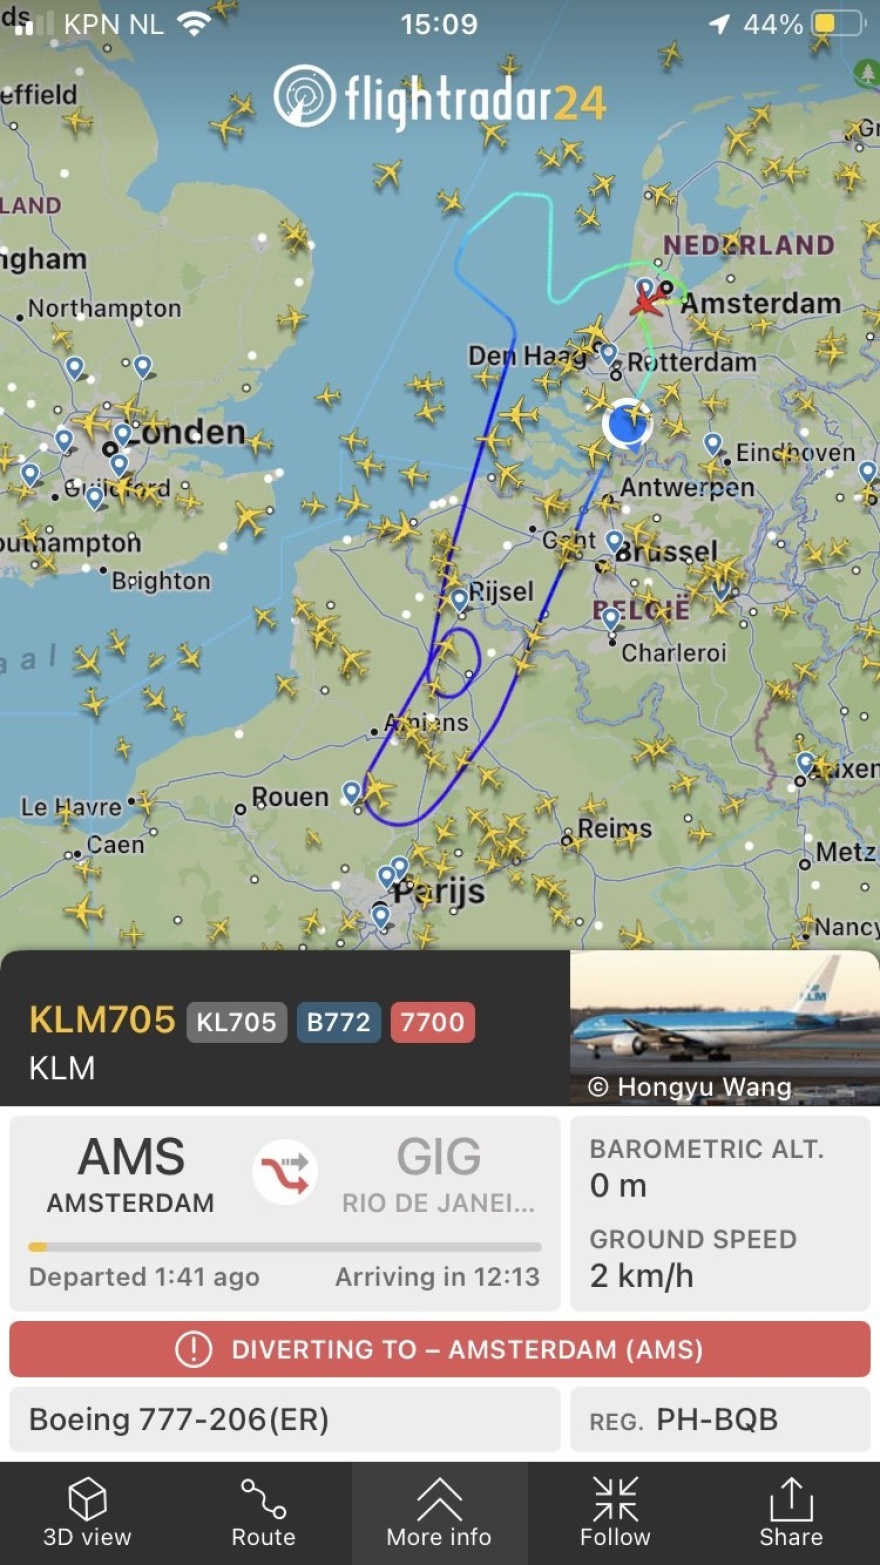 KLM705-1